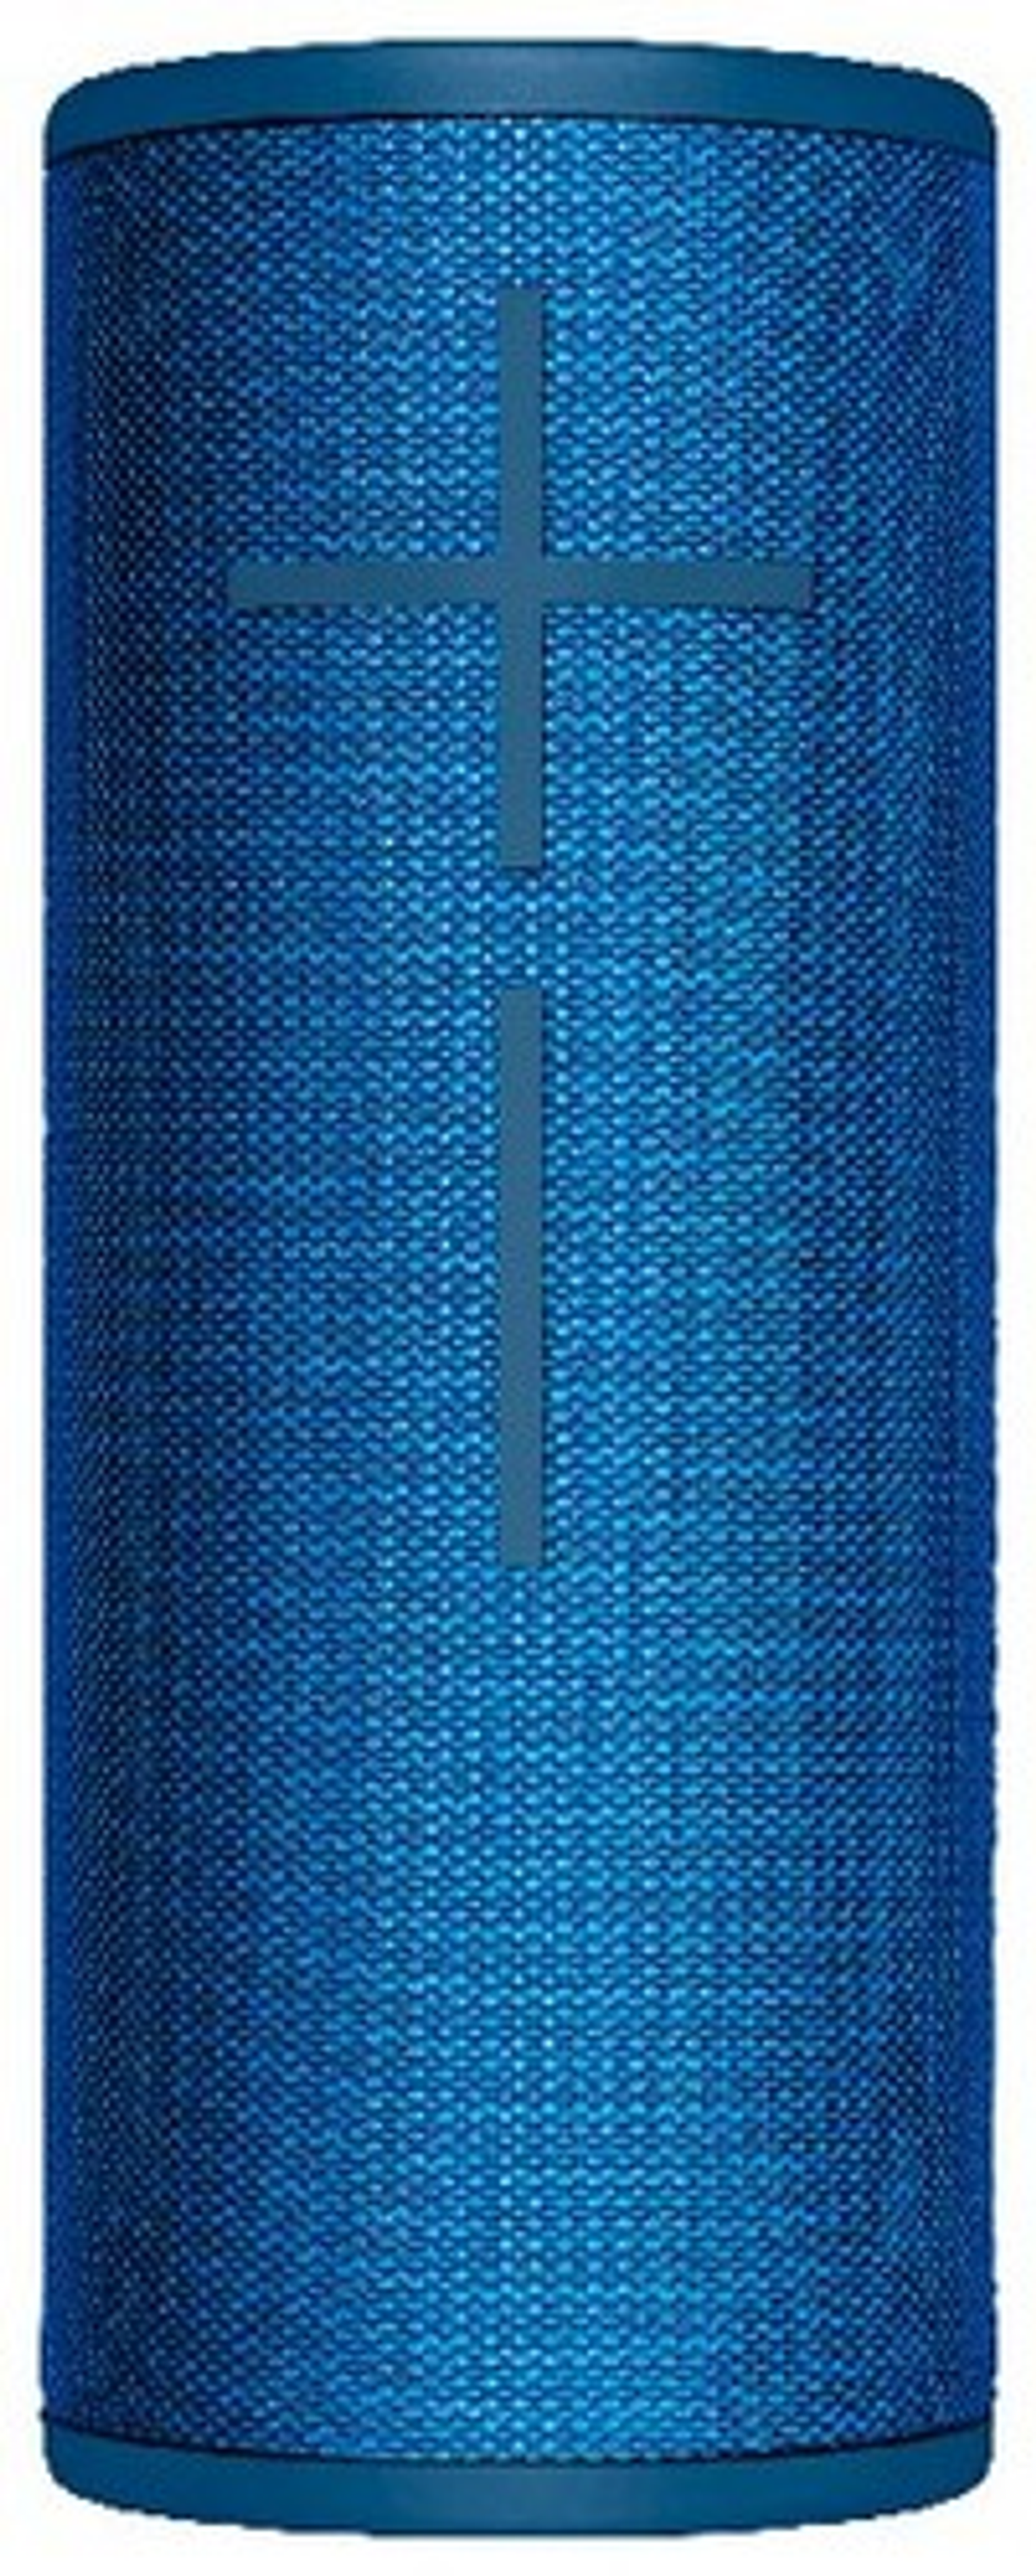 ULTIMATE Lautsprecher, 3 BLUE LAGOON BOOM 984-001362 EARS Blaue Bluetooth Lagune, Wasserfest